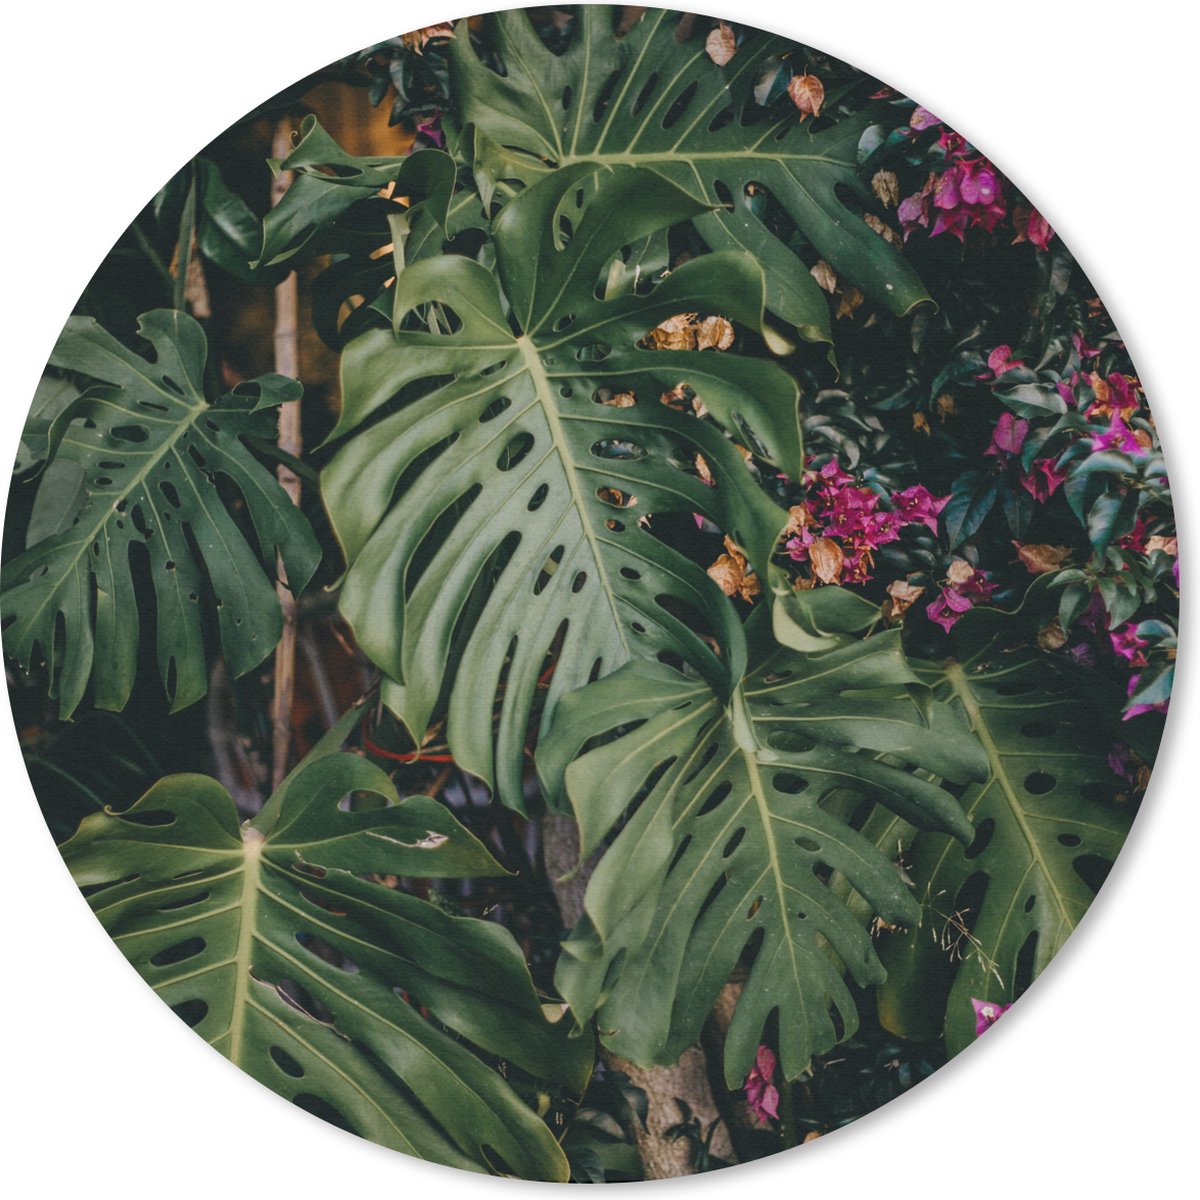 Muismat - Mousepad - Rond - Monstera (gatenplant) achtergrond - 50x50 cm - Ronde muismat